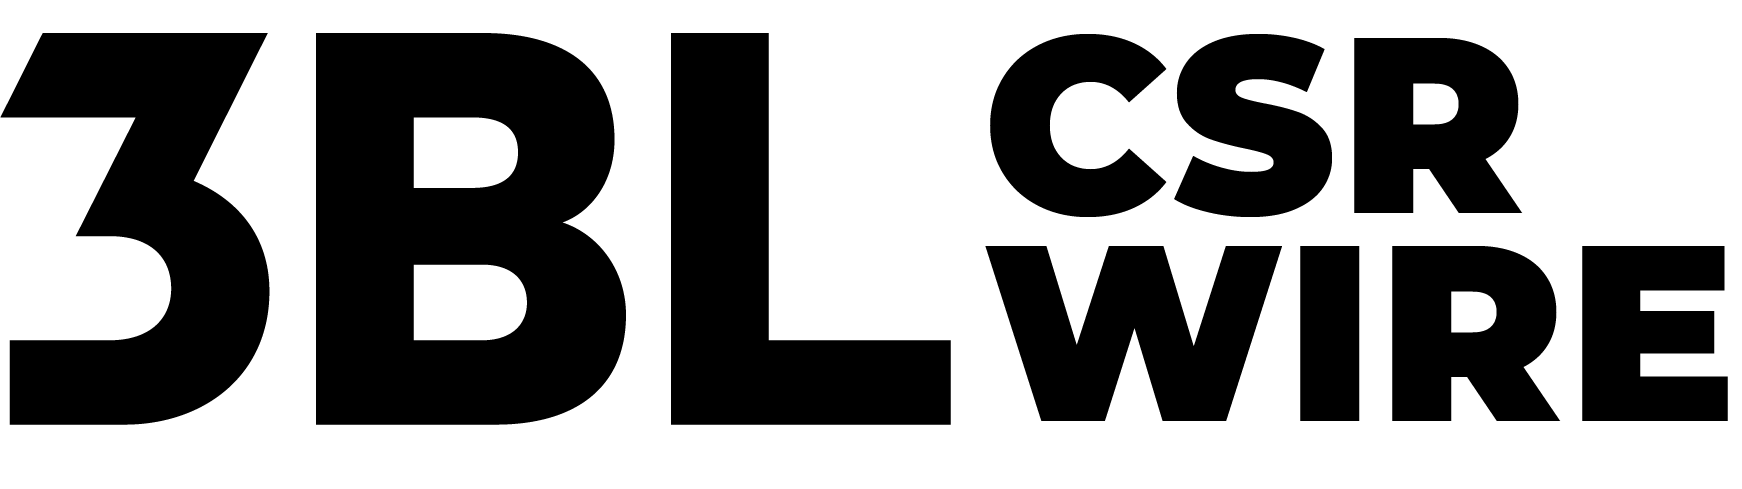 3BL CSRwire logo